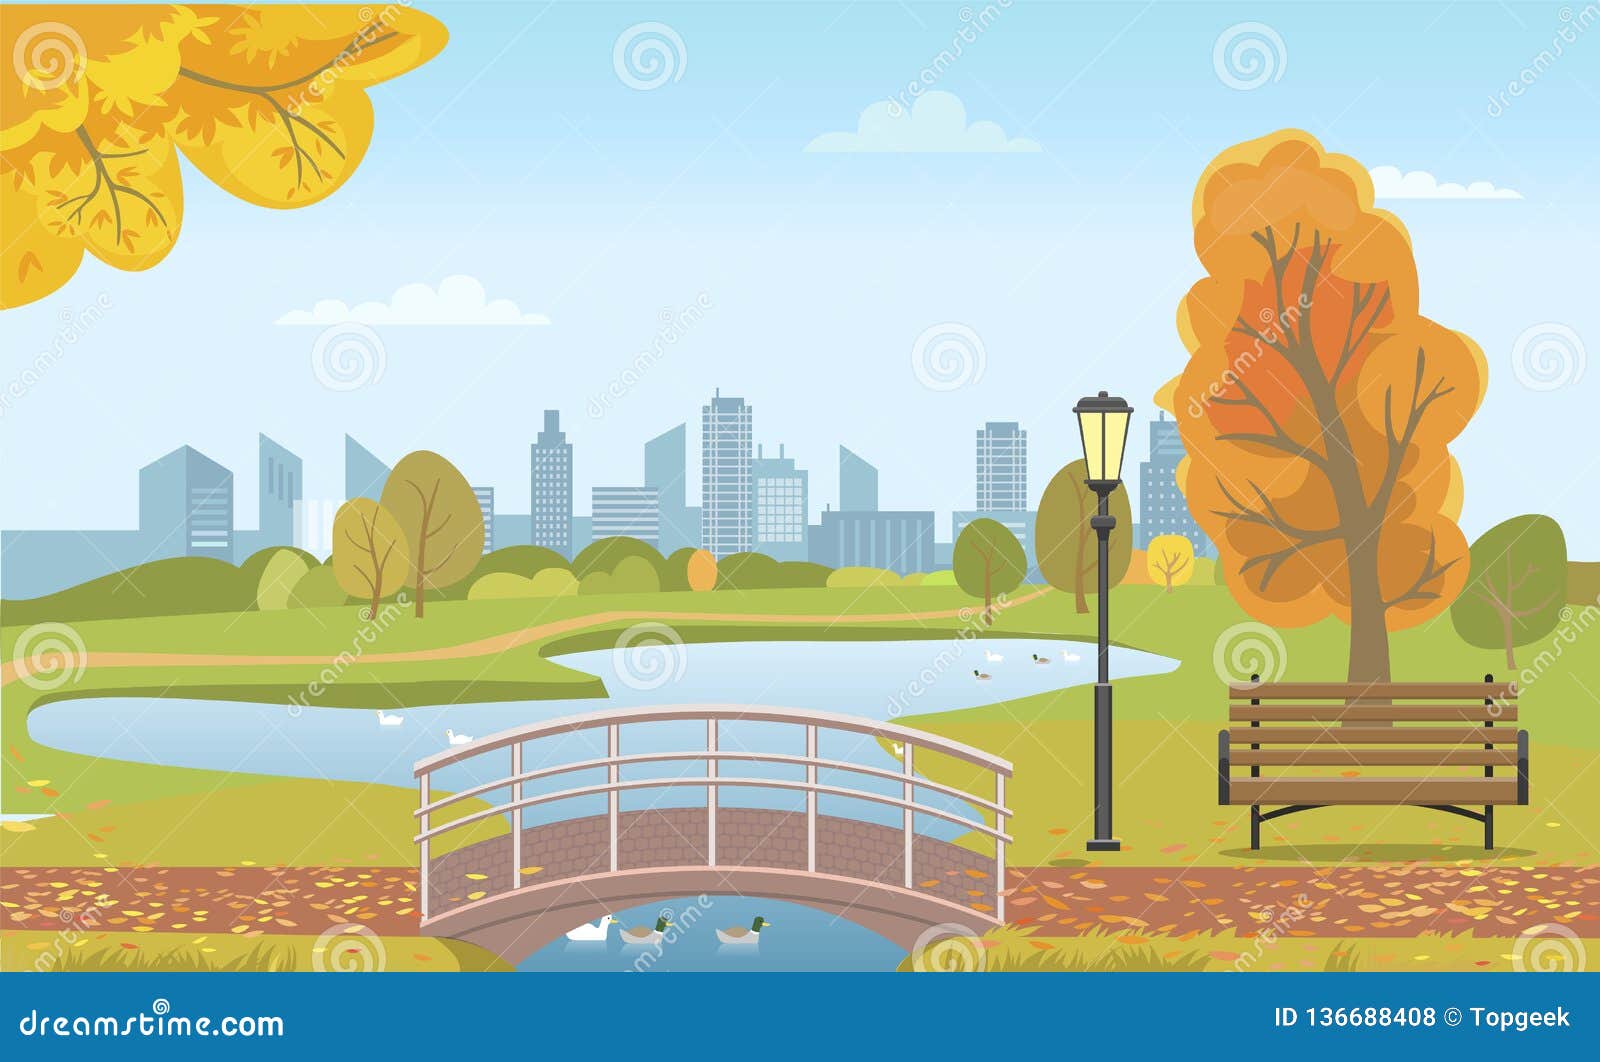 Autumn City Park with Pond and Ducks Under Bridge Stock Vector ...